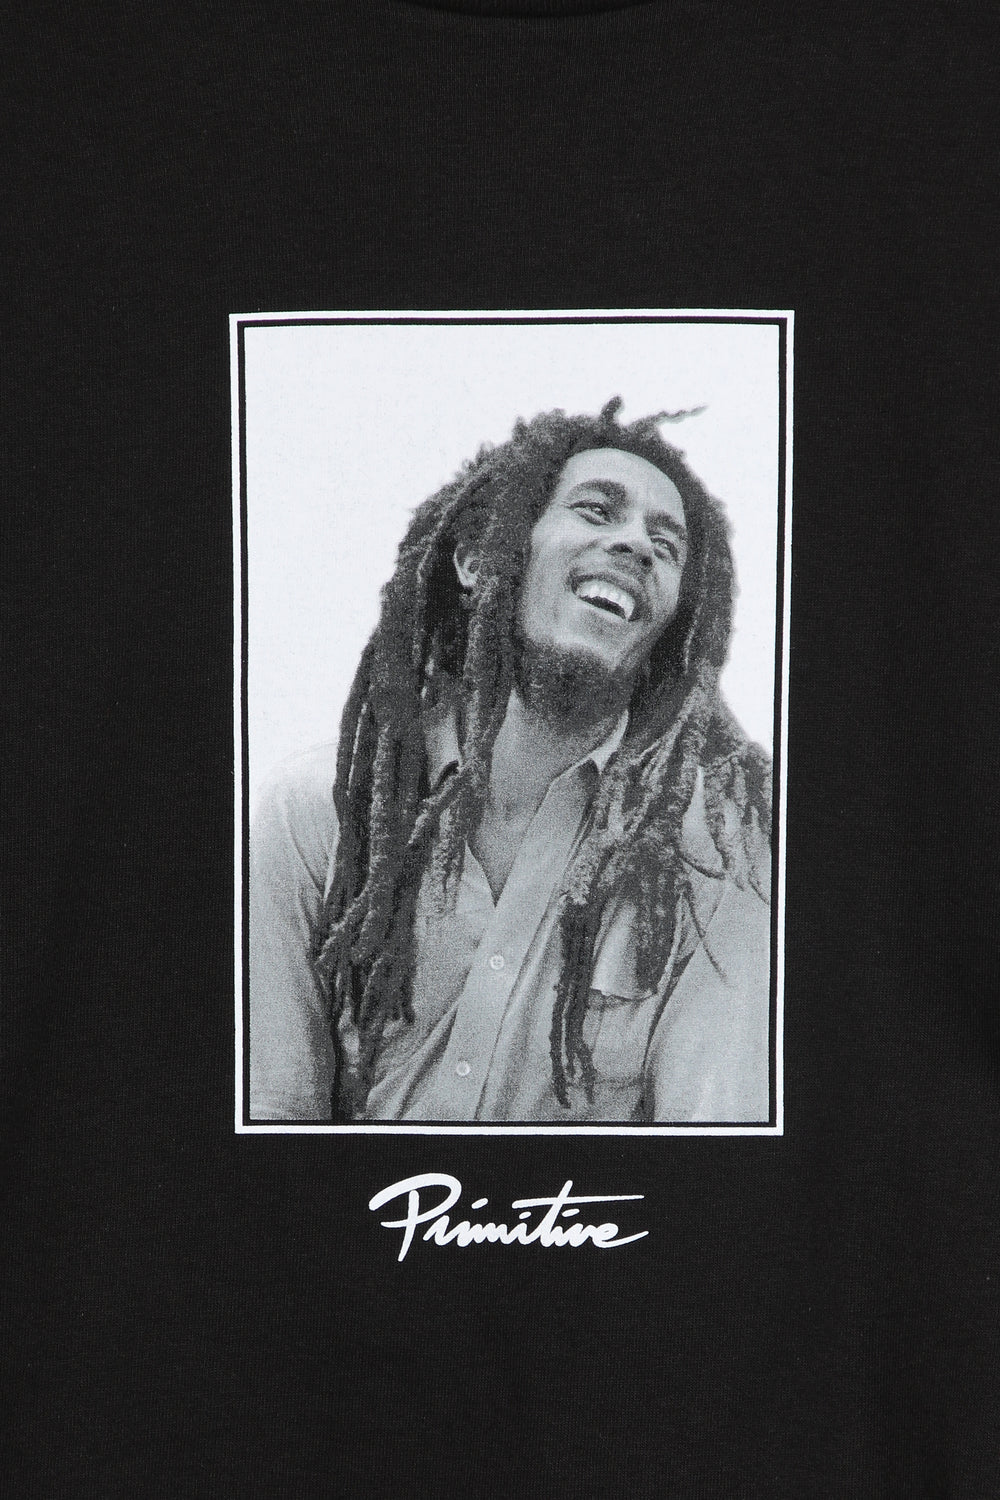 Primitive x Bob Marley Uprising T-Shirt Black